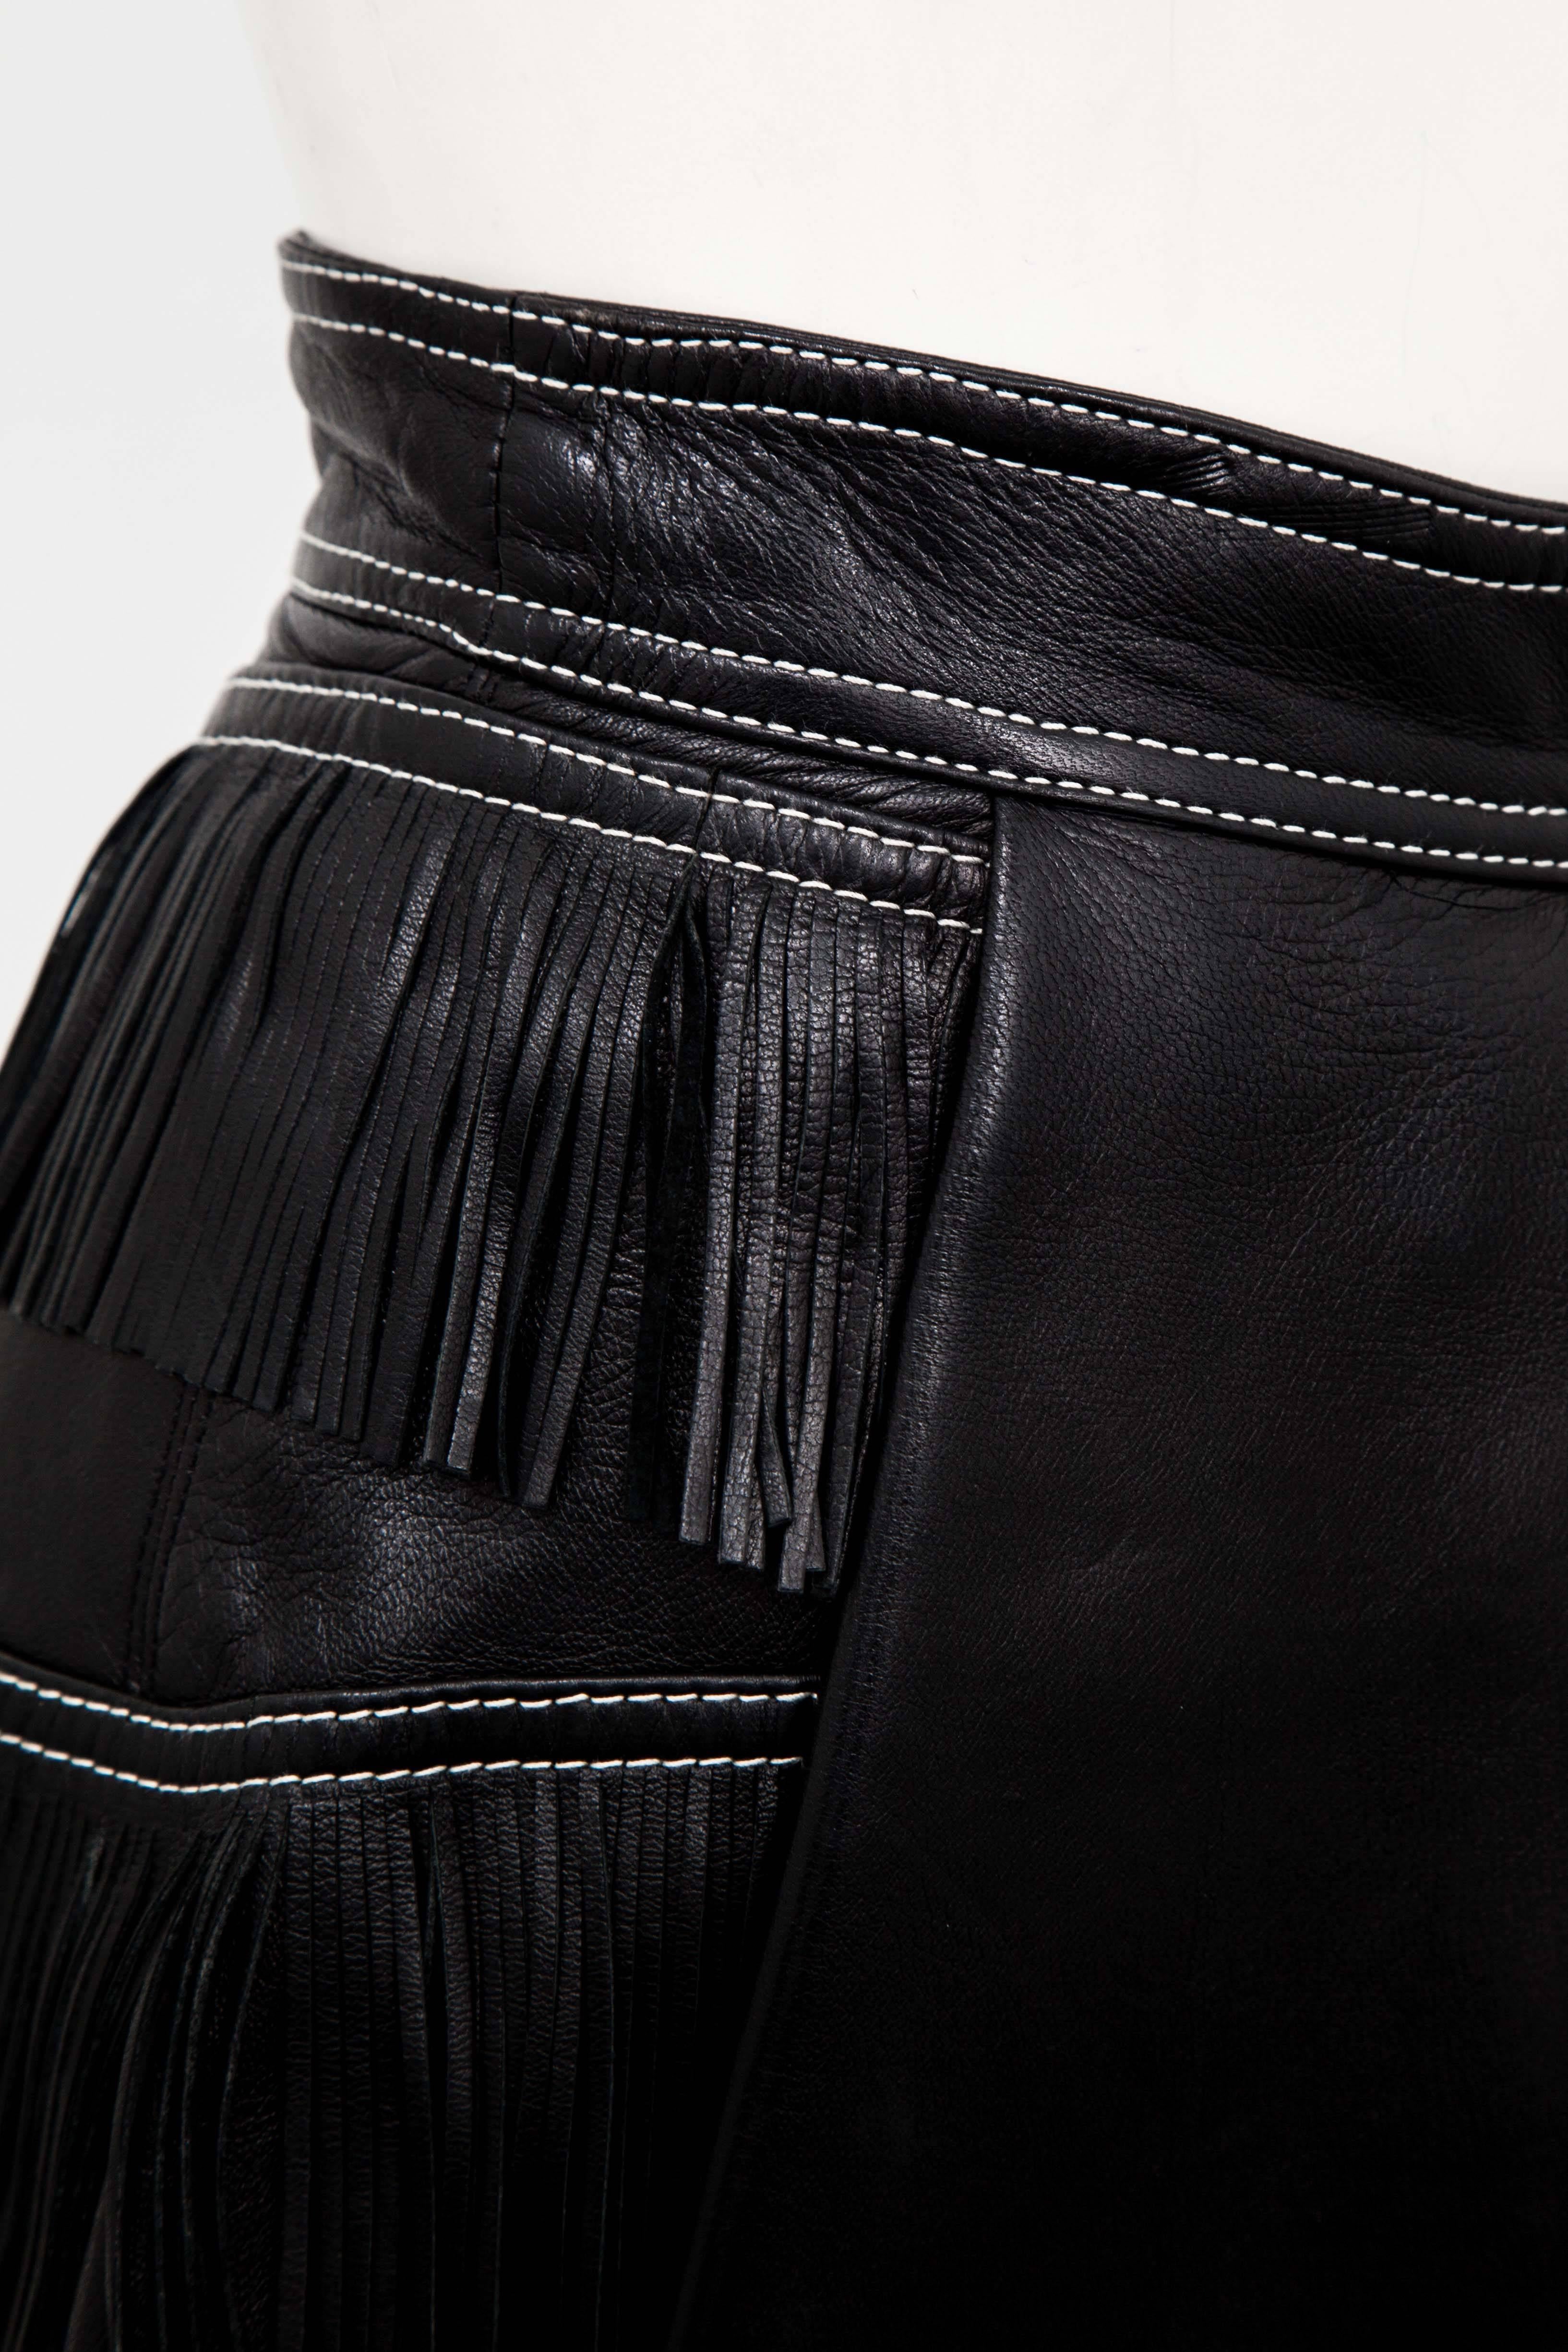 Gianni Versace Iconic 1992 Runway Black Leather Fringe Skirt For Sale 1